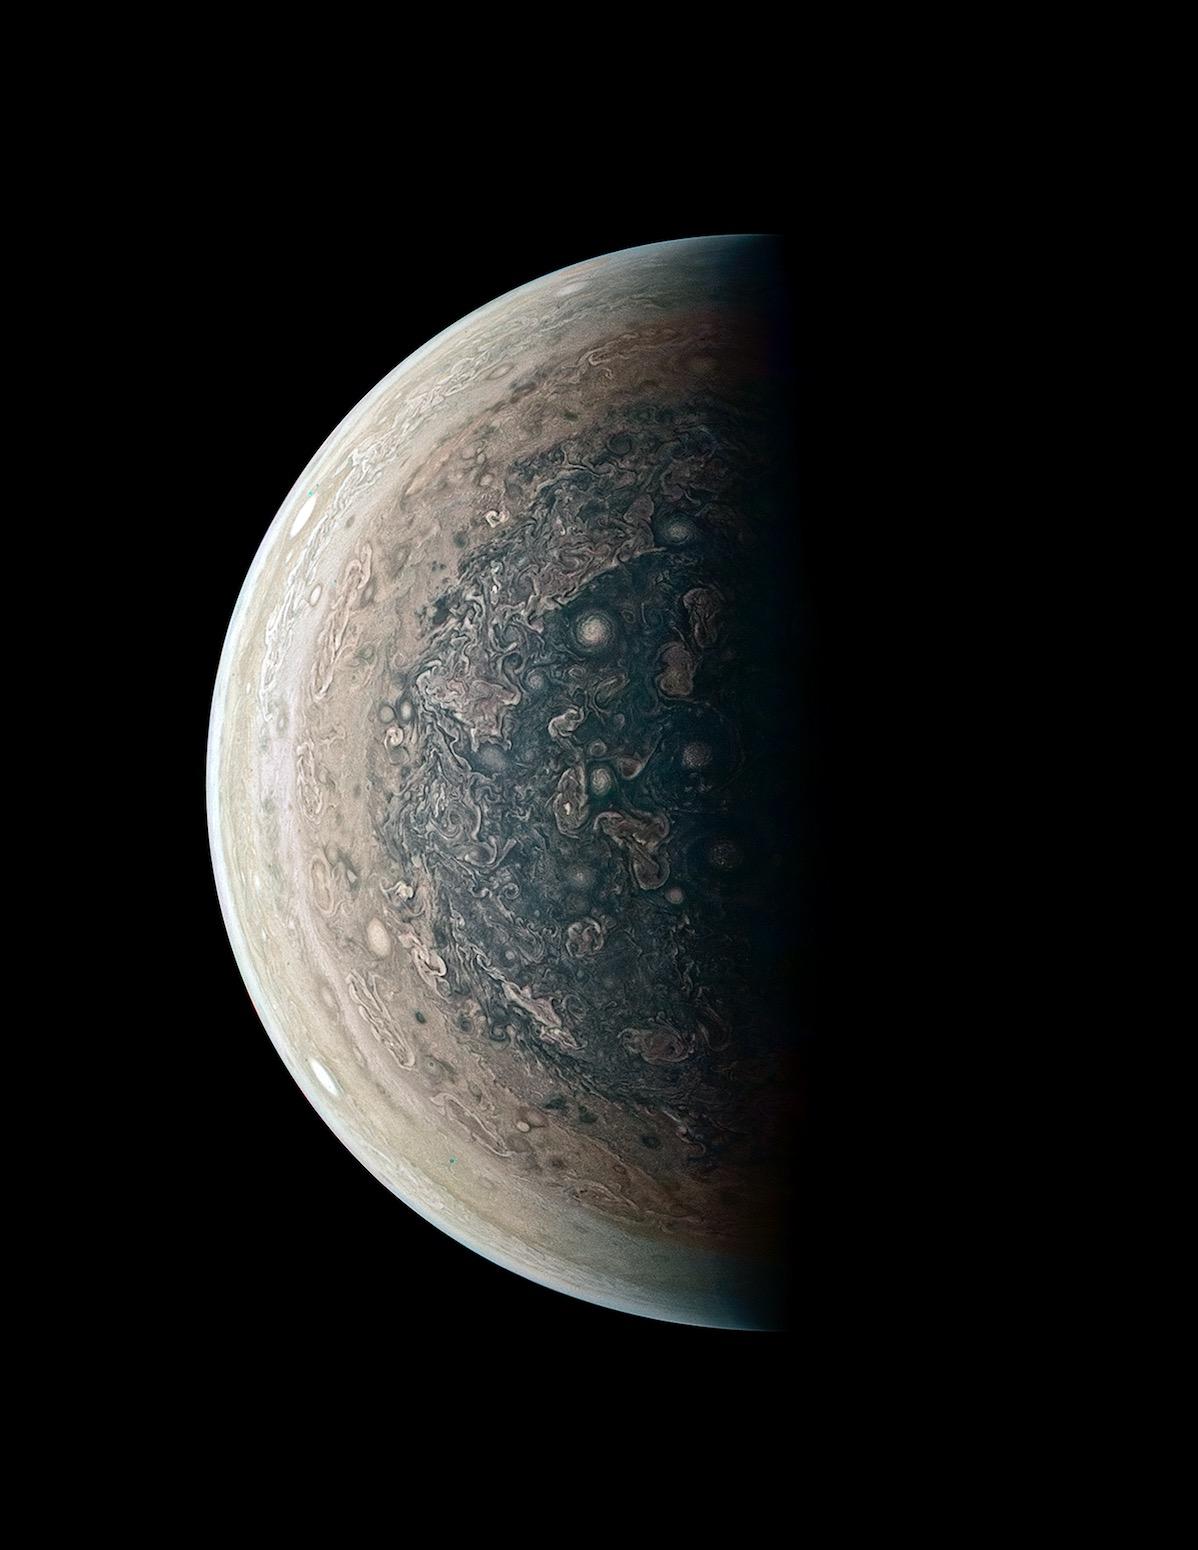 Enjoy This Lovely Wallpaper of Jupiter from Below